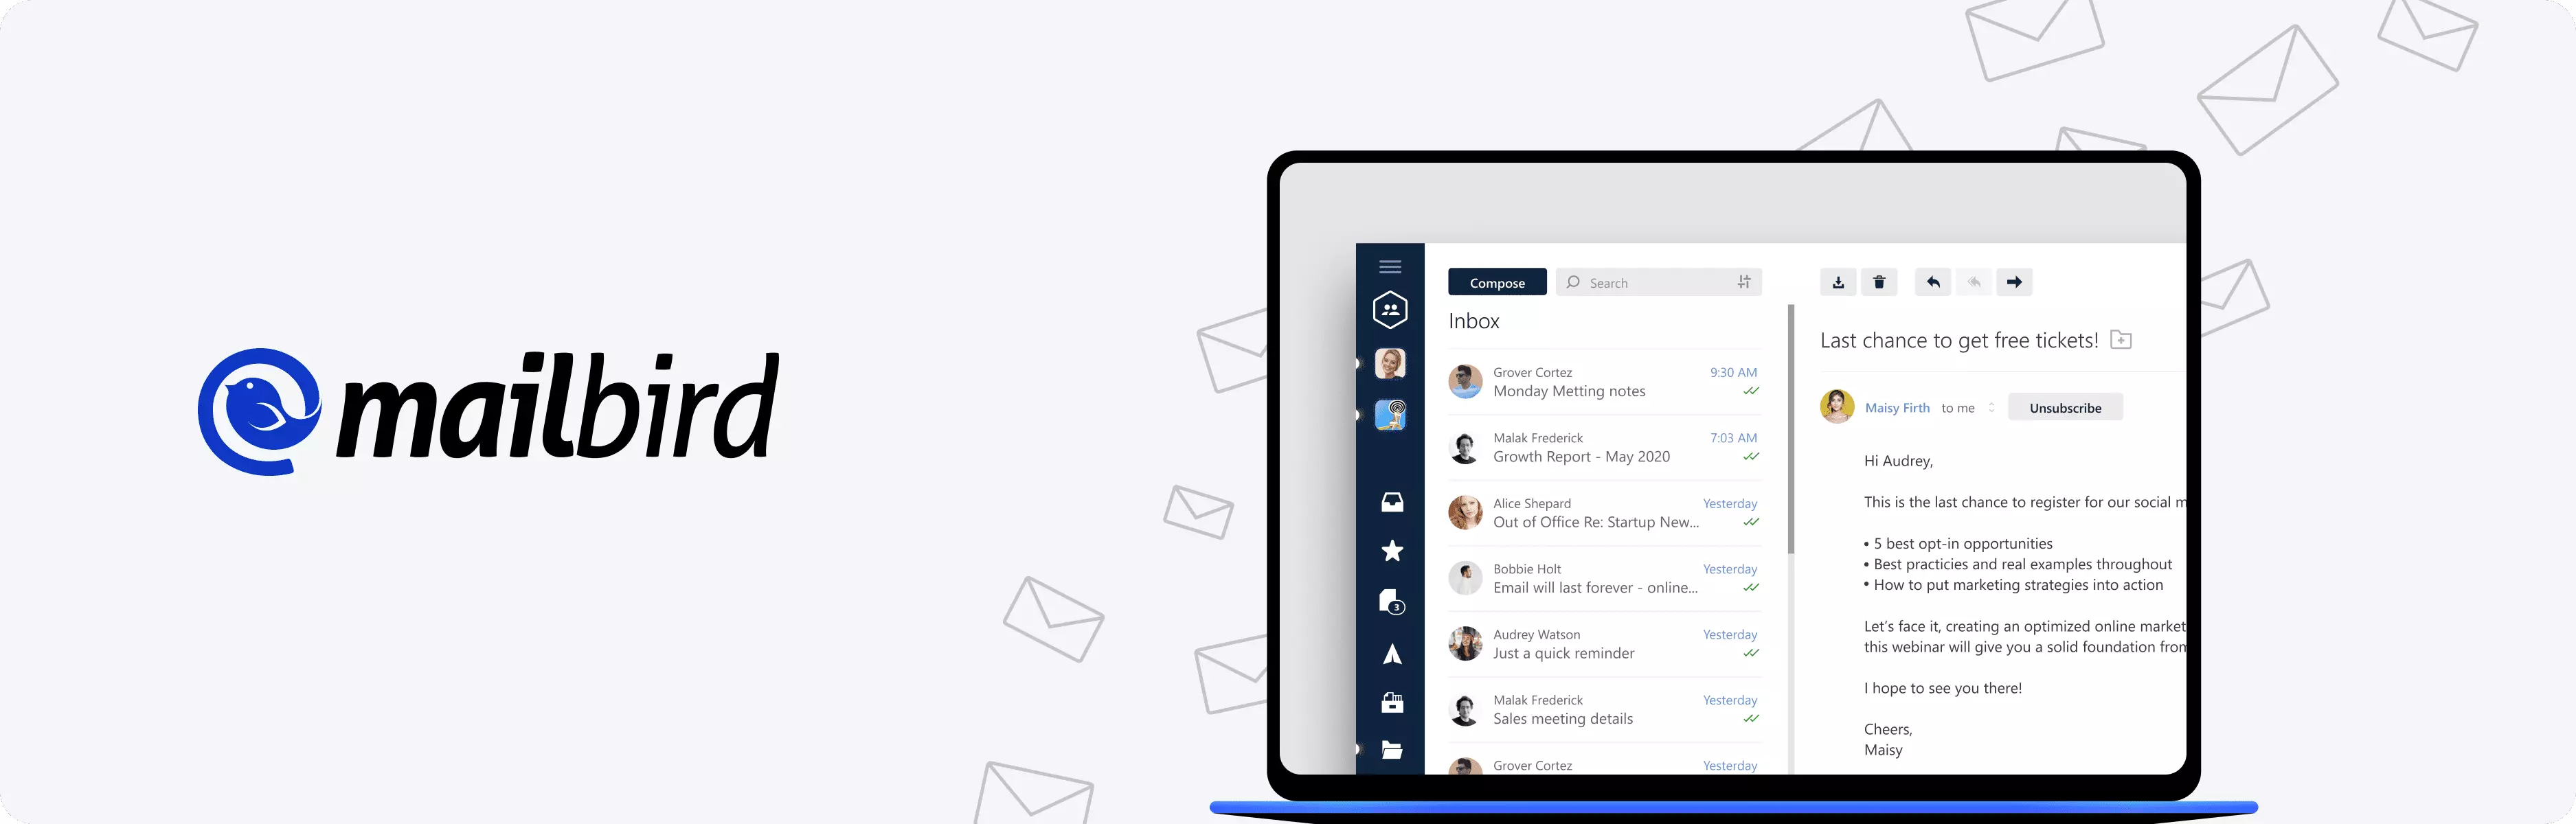 Mailbird email client